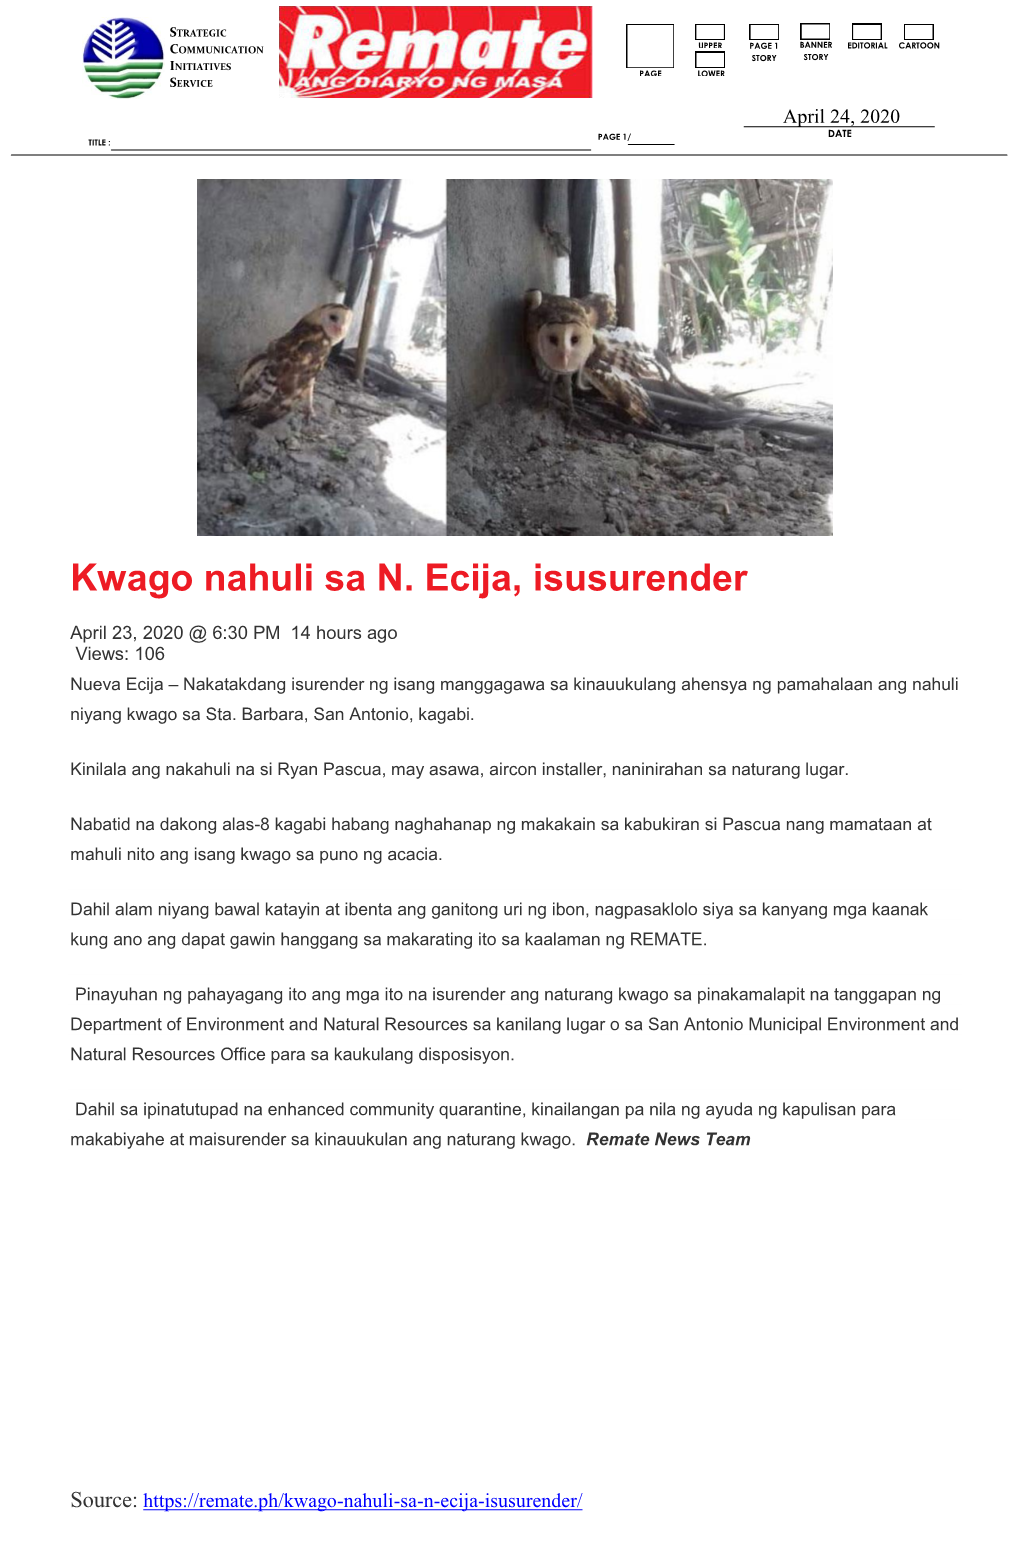 Kwago Nahuli Sa N. Ecija, Isusurender